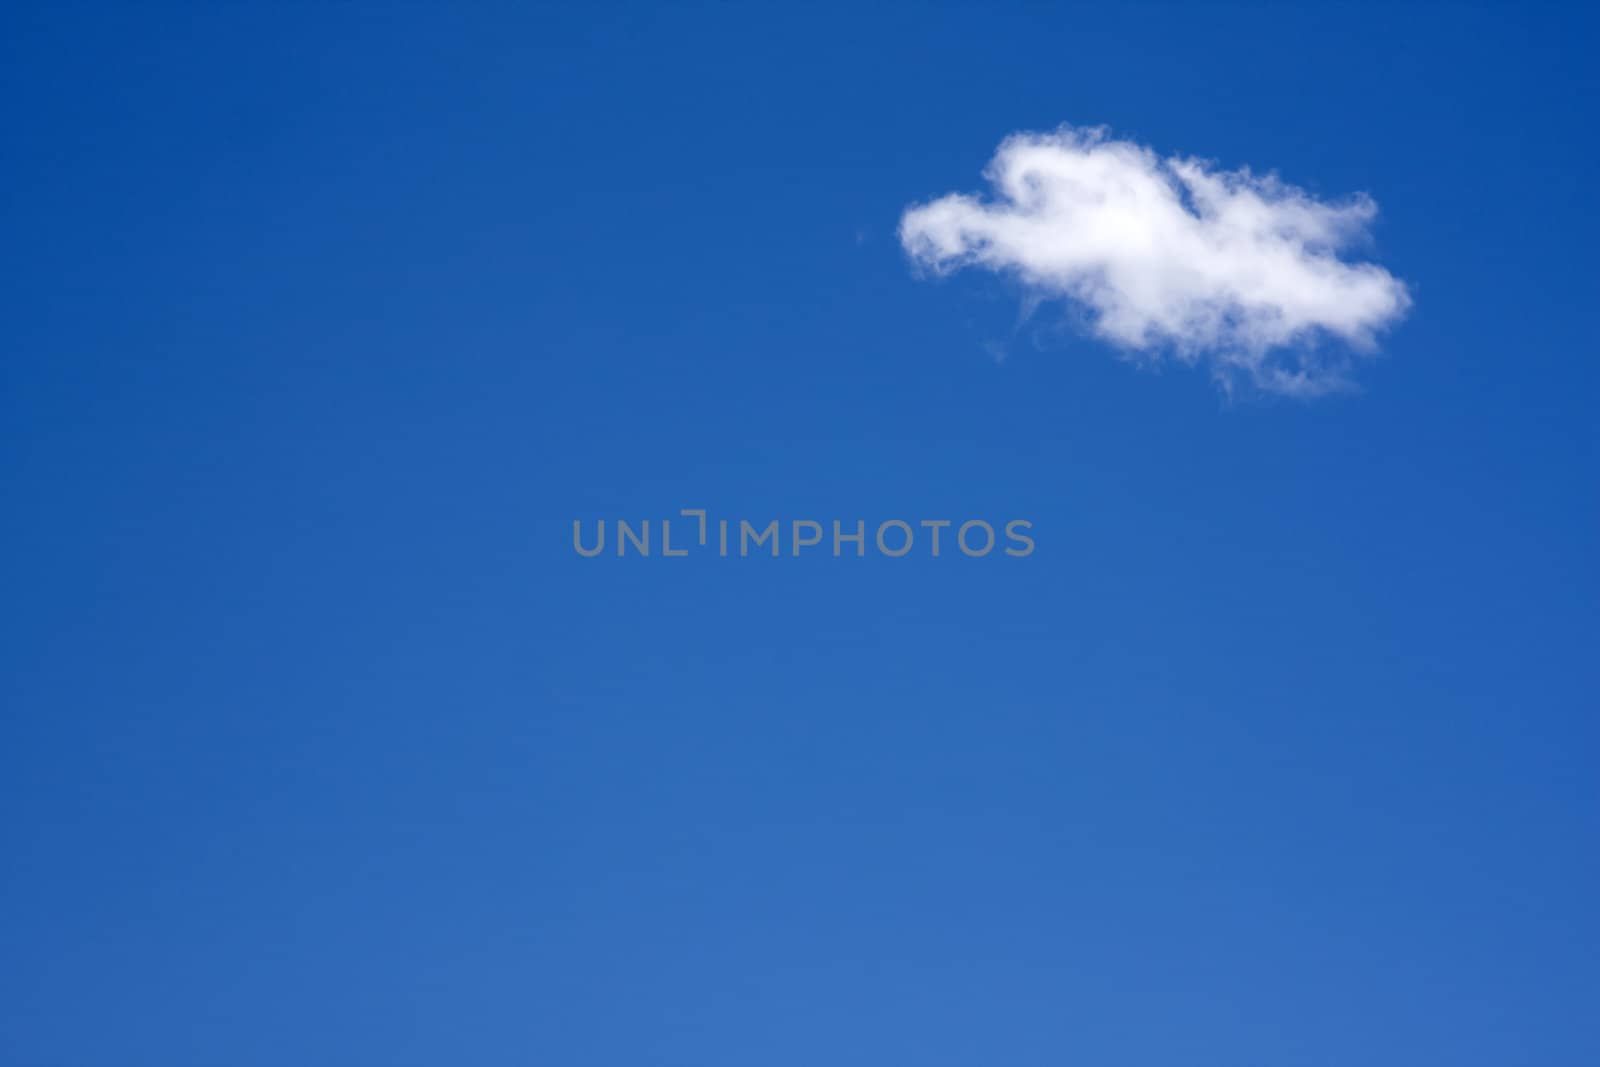 Single white fluffy cumulus cloud against a blue sky